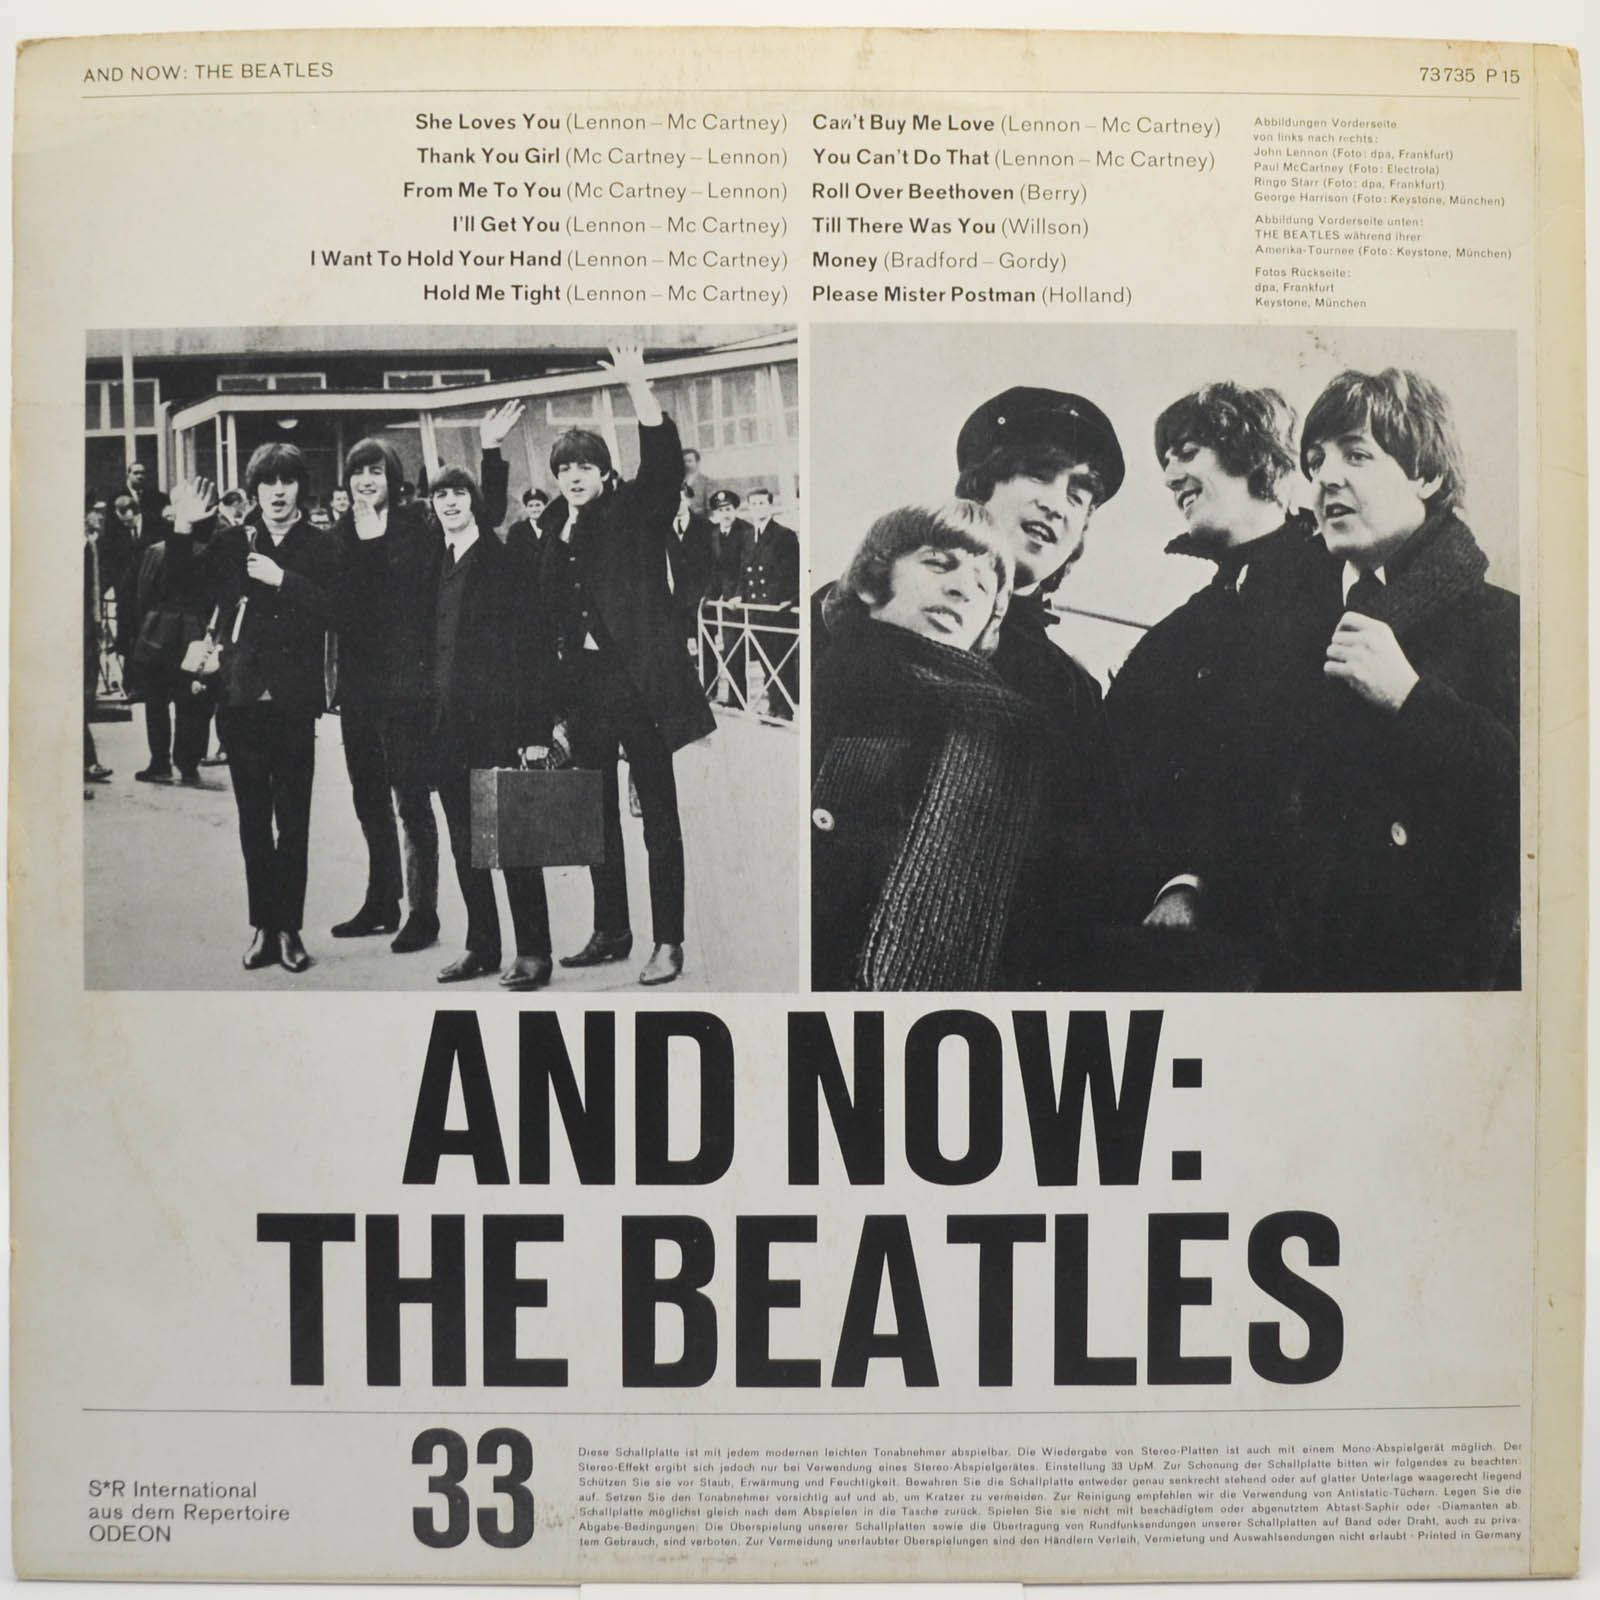 The beatles перевод песен. Now and then Beatles. The Beatles Now and then обложки.